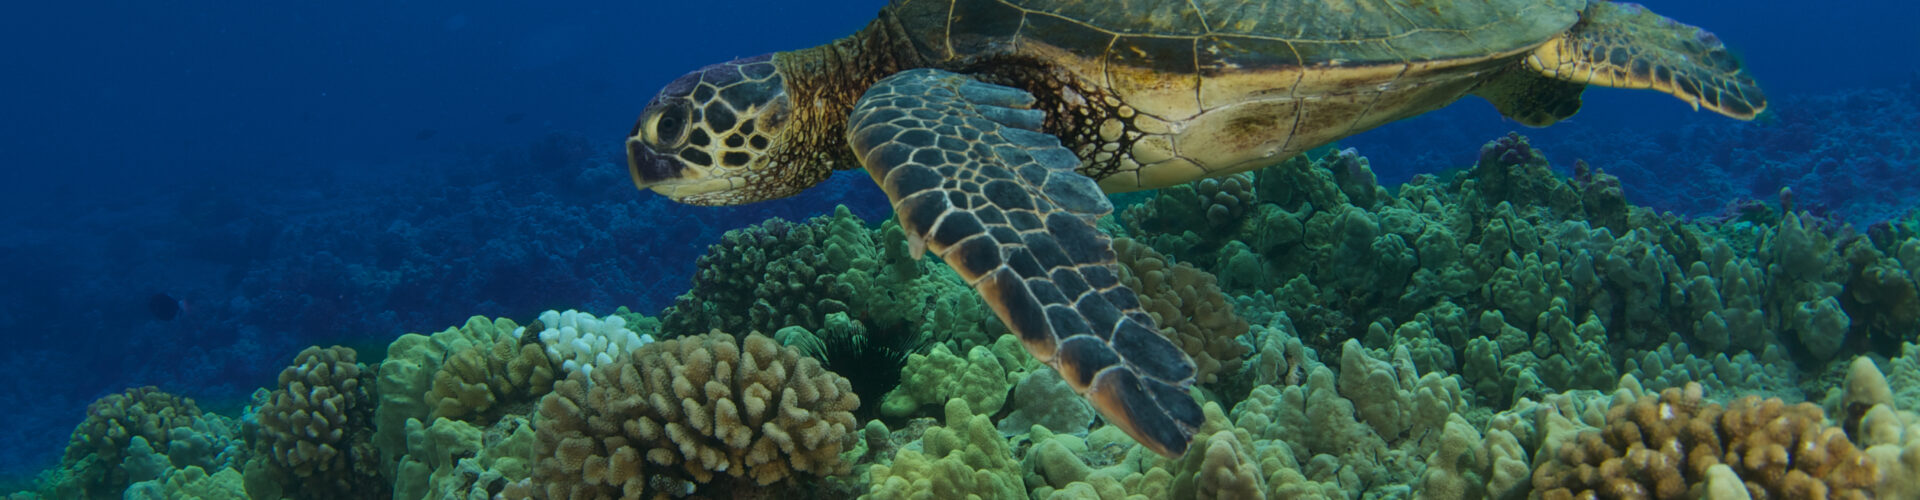 Red de groene zeeschildpad